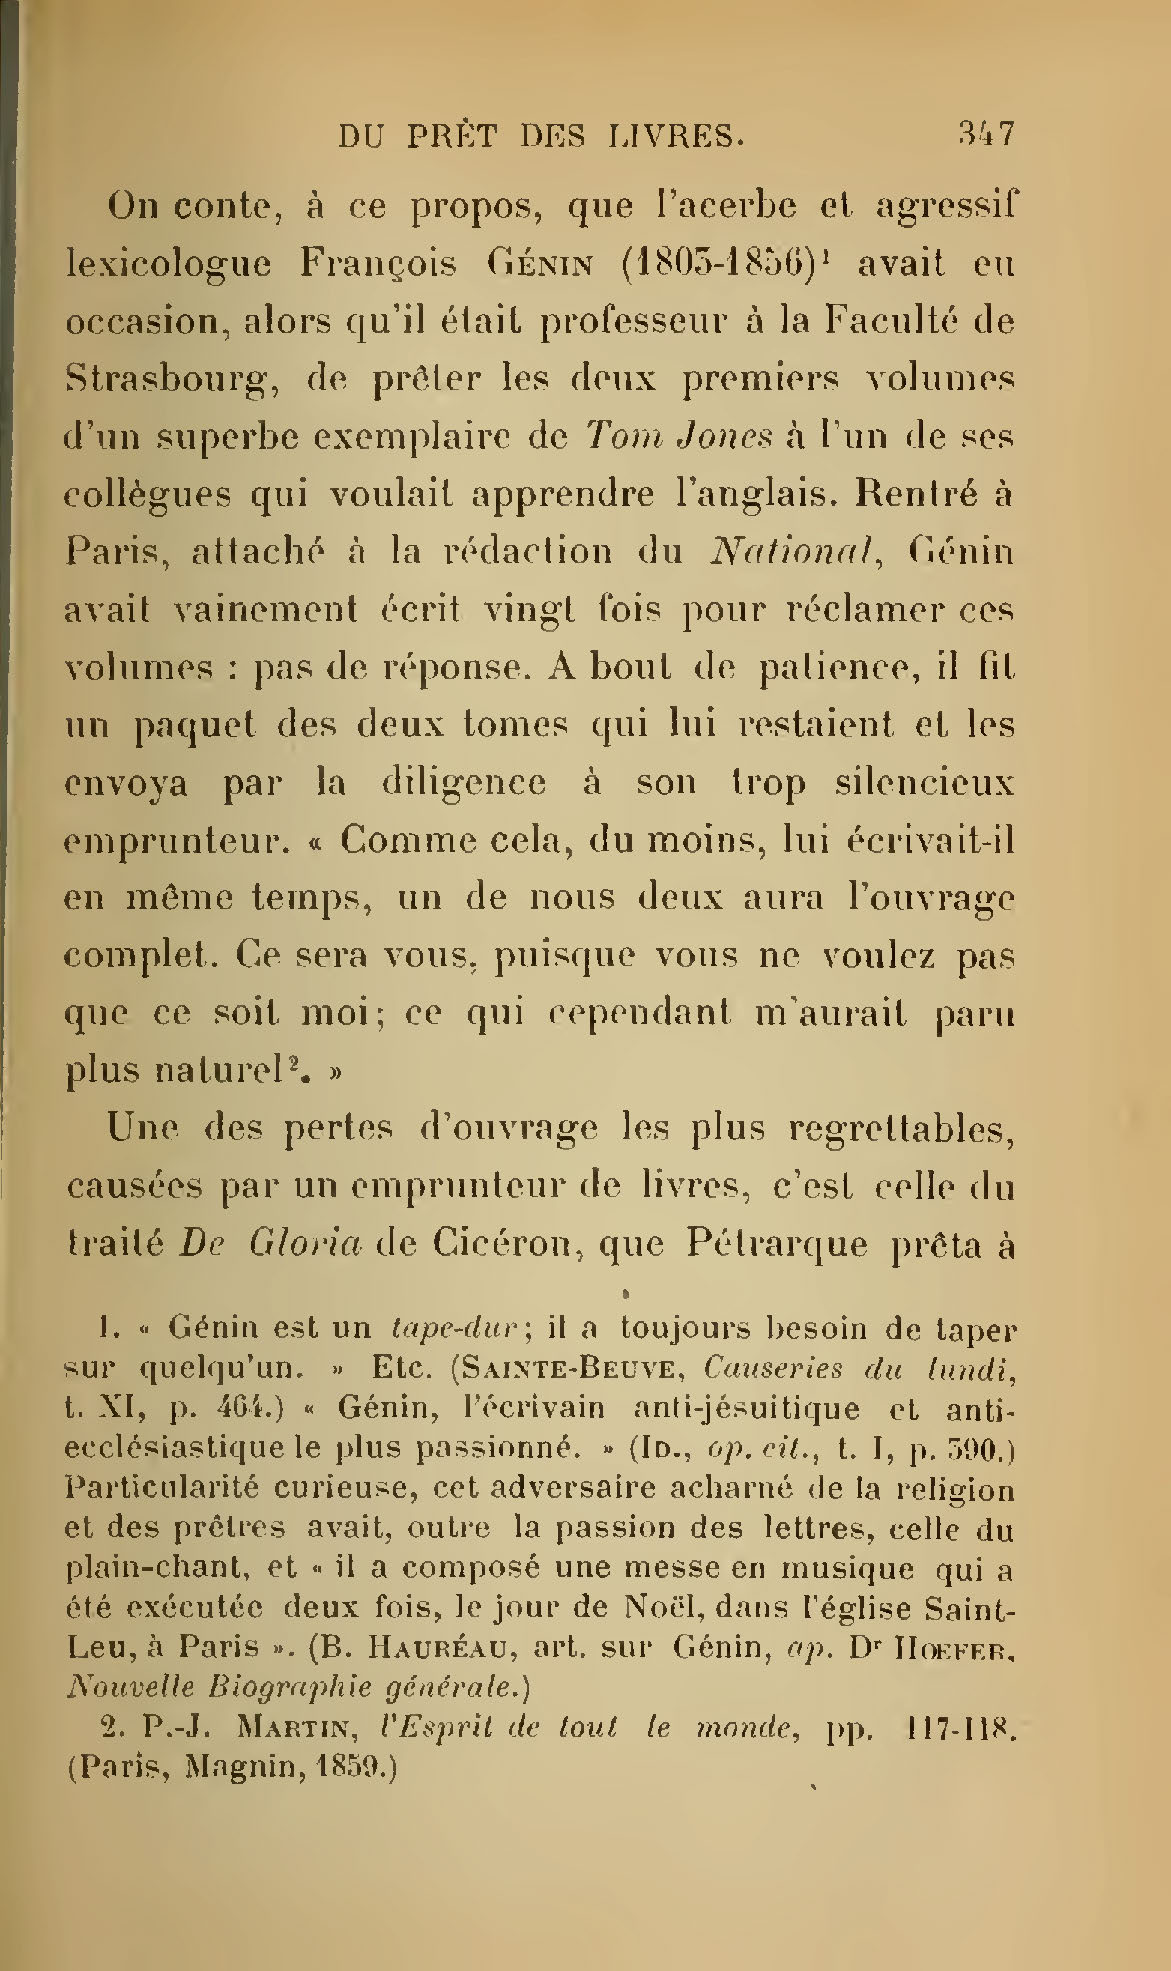 Albert Cim, Le Livre, t. II, p. 347.